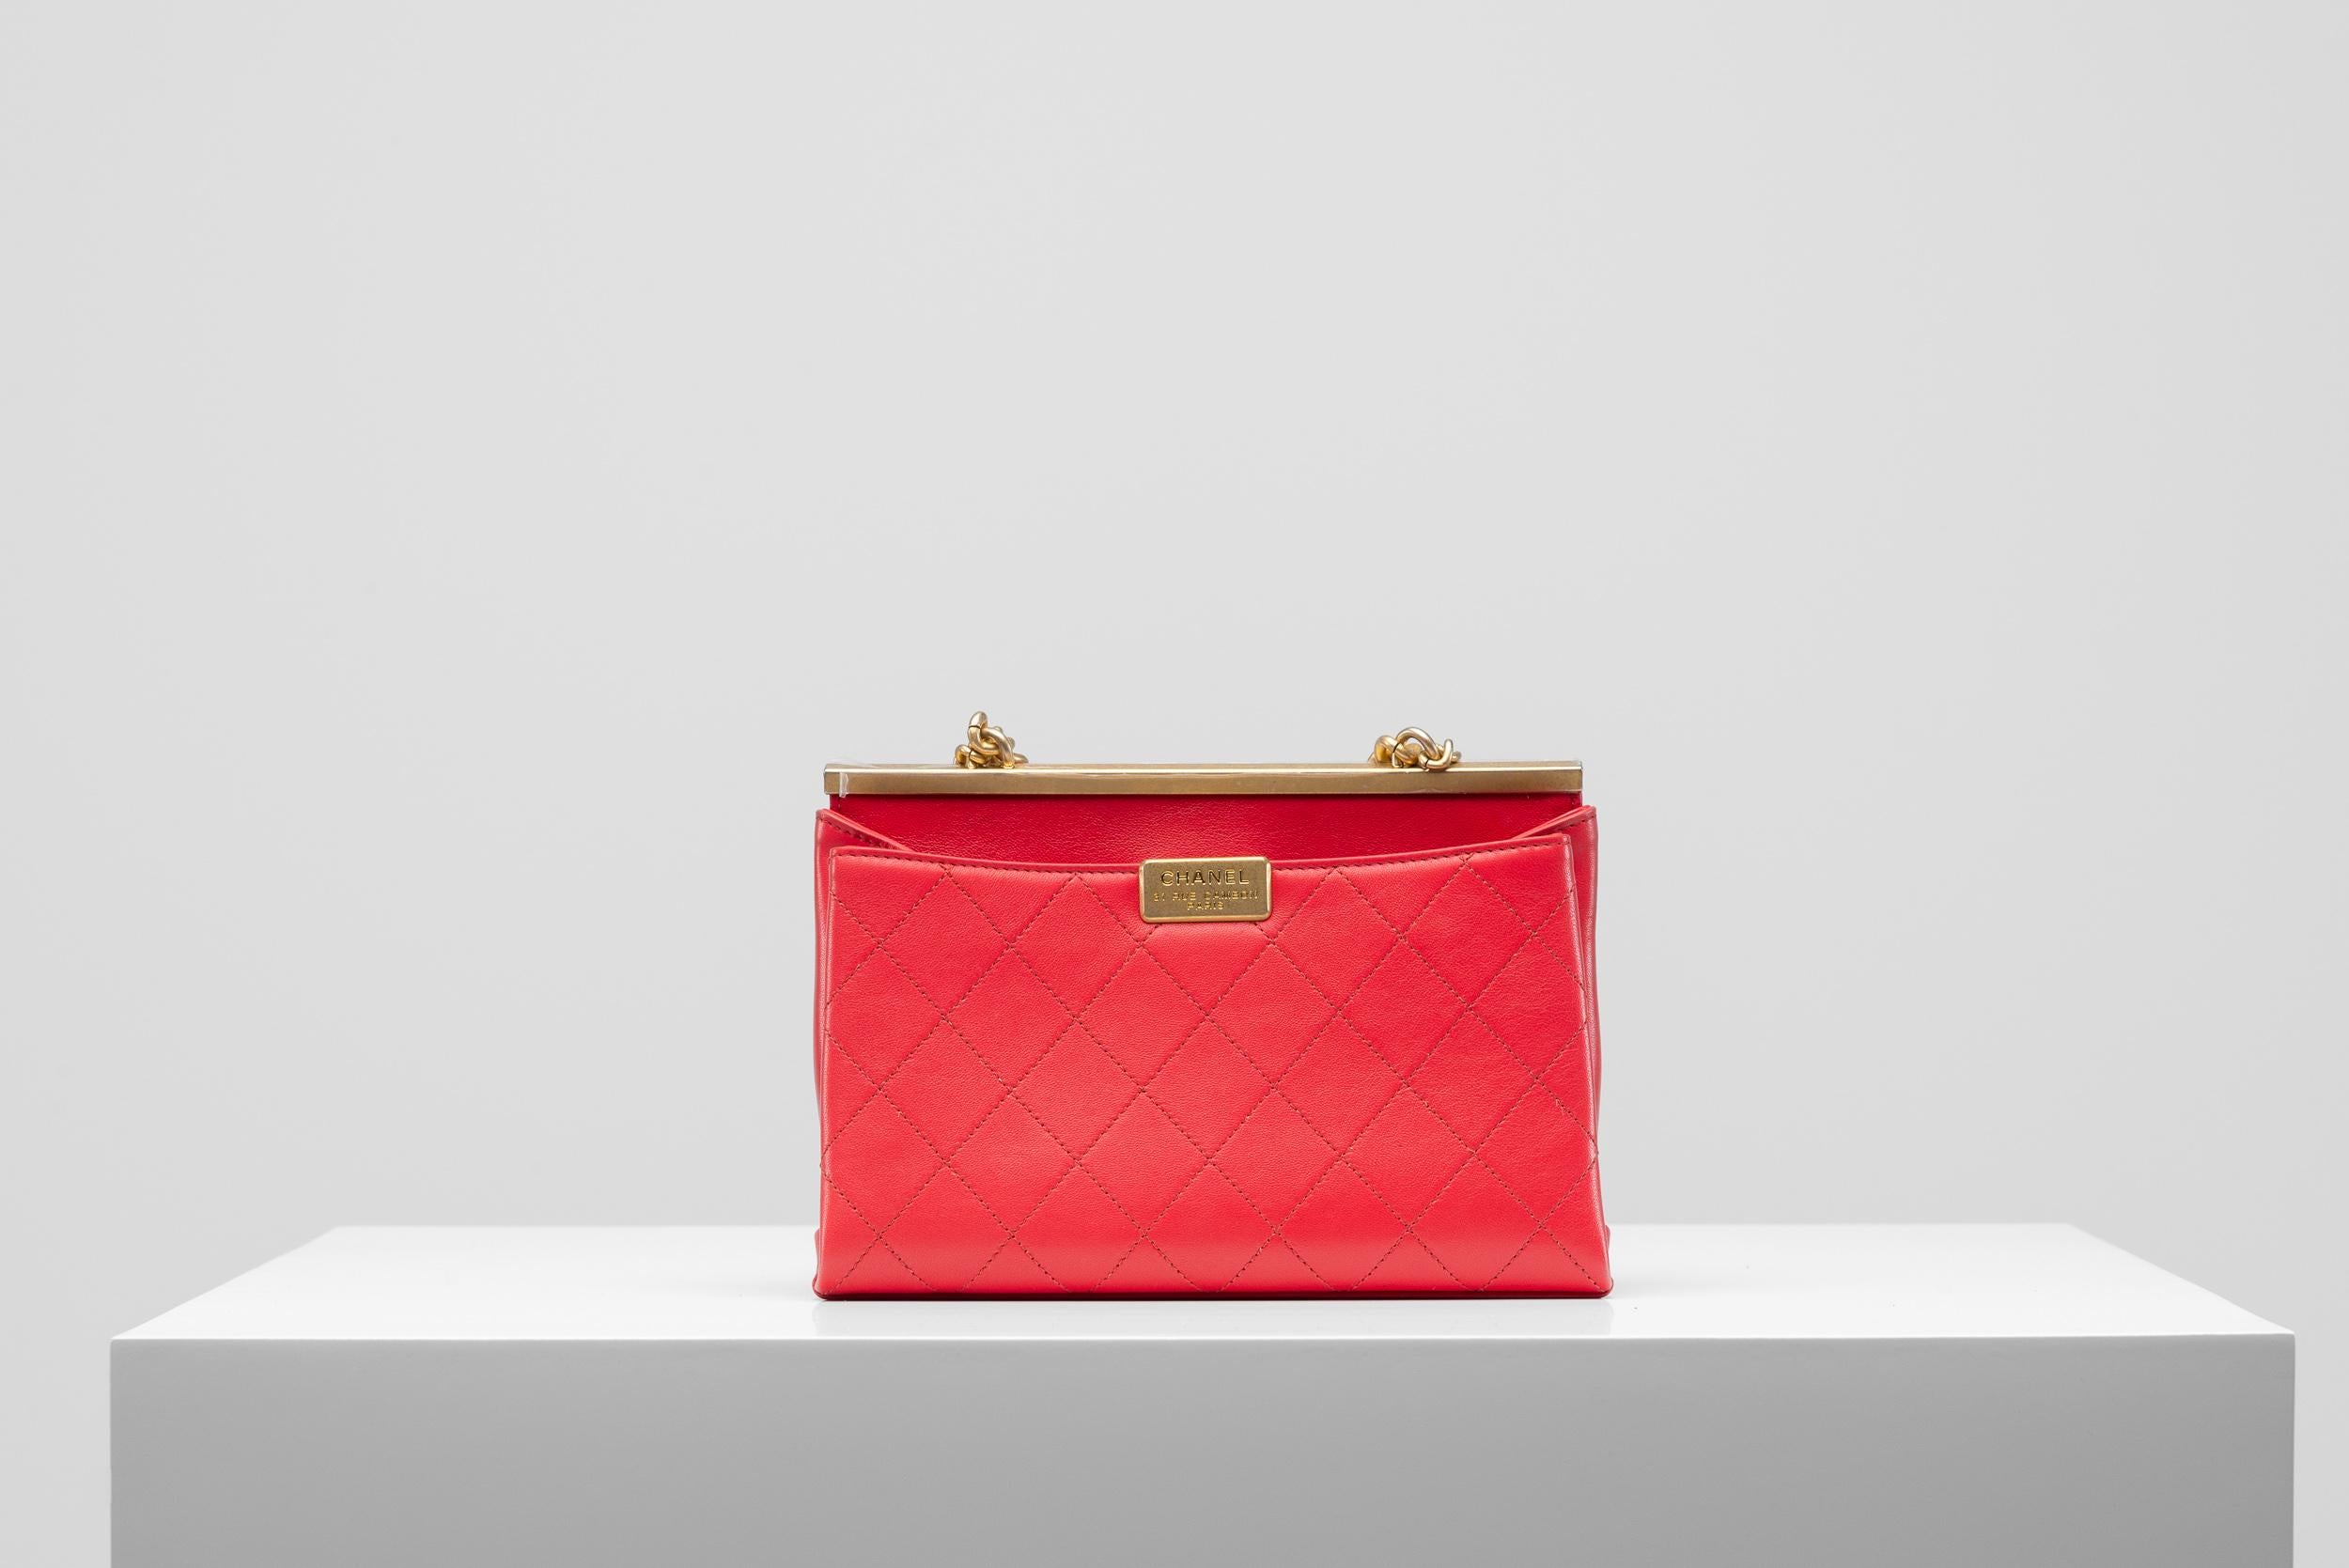 Chanel Red Flap Bag Gold-Brushed Hardware Rare 2